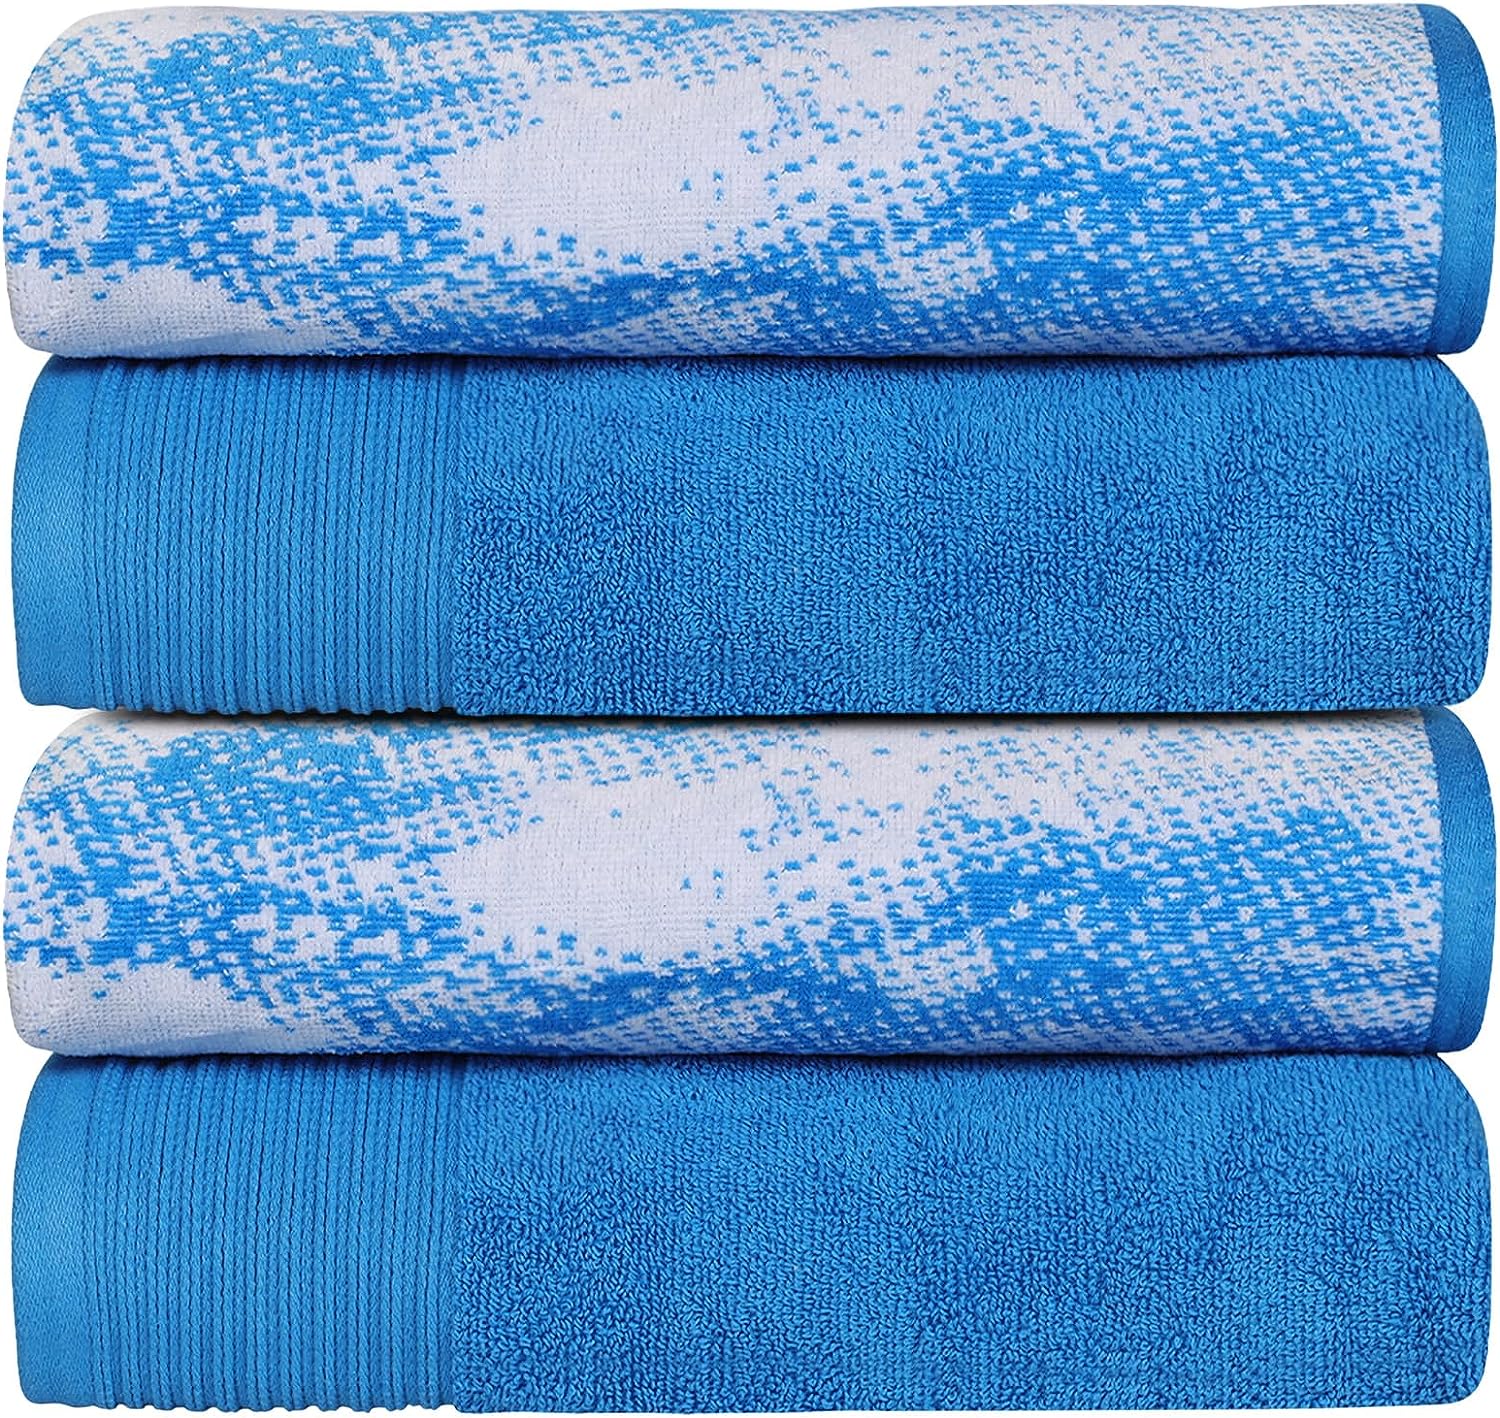 Superior Cotton Medium Weight Marble Solid Jacquard Border Bath Towels (Set of 4) - Blue